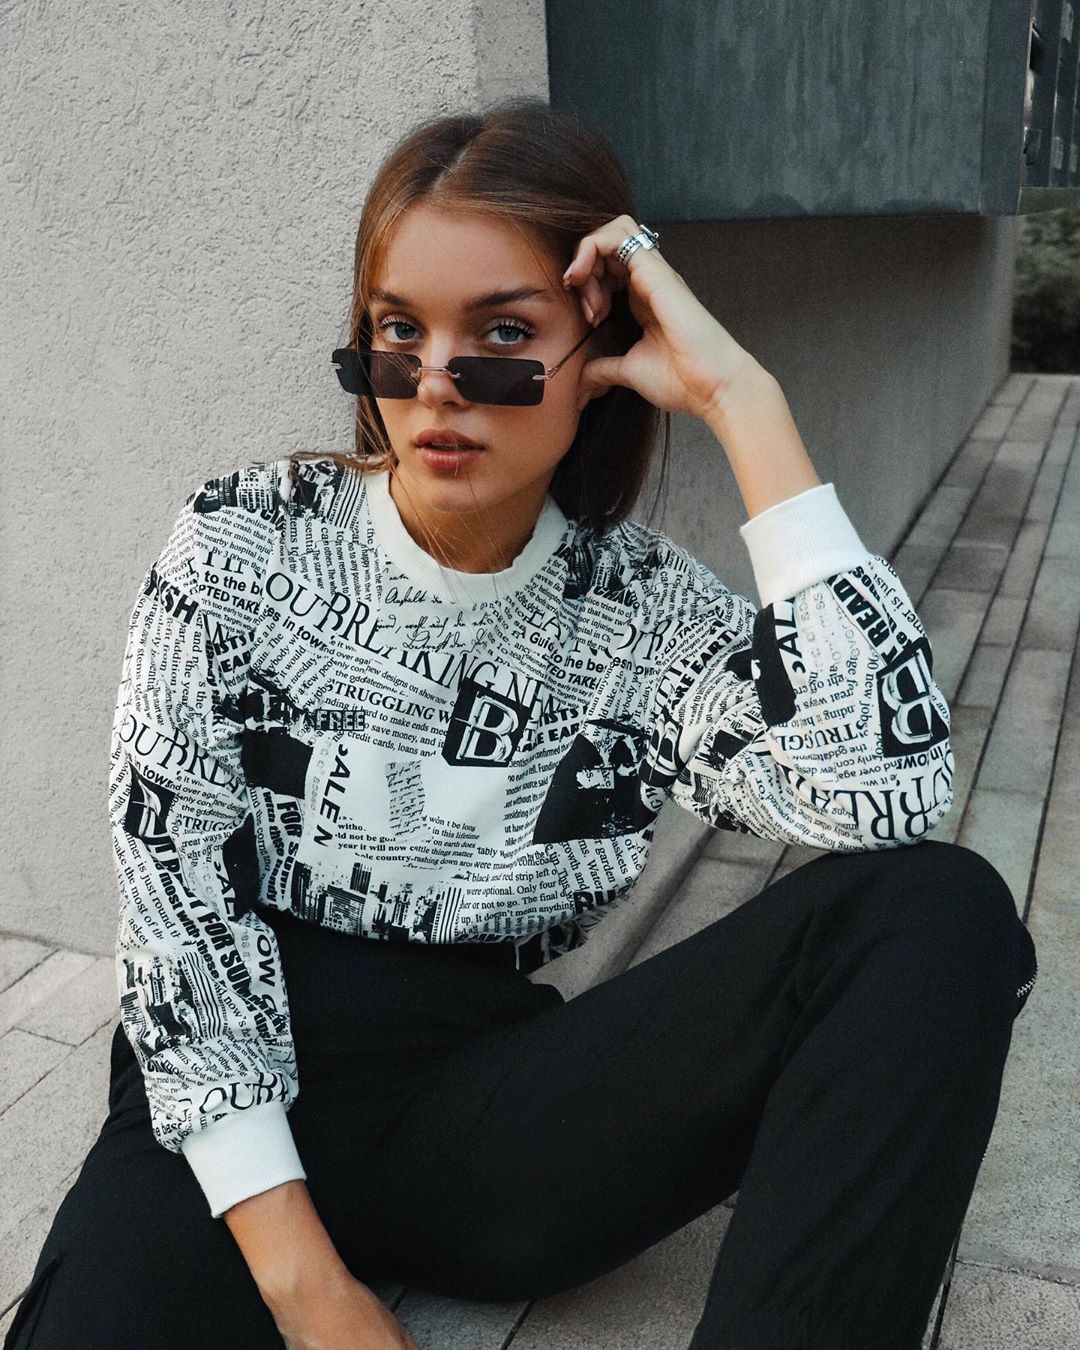 Anna Zak Hairstyle For Girls, Cool Attitude Girls, sunglasses, eyewear: Black And White Outfit,  Anna Zak Instagram  